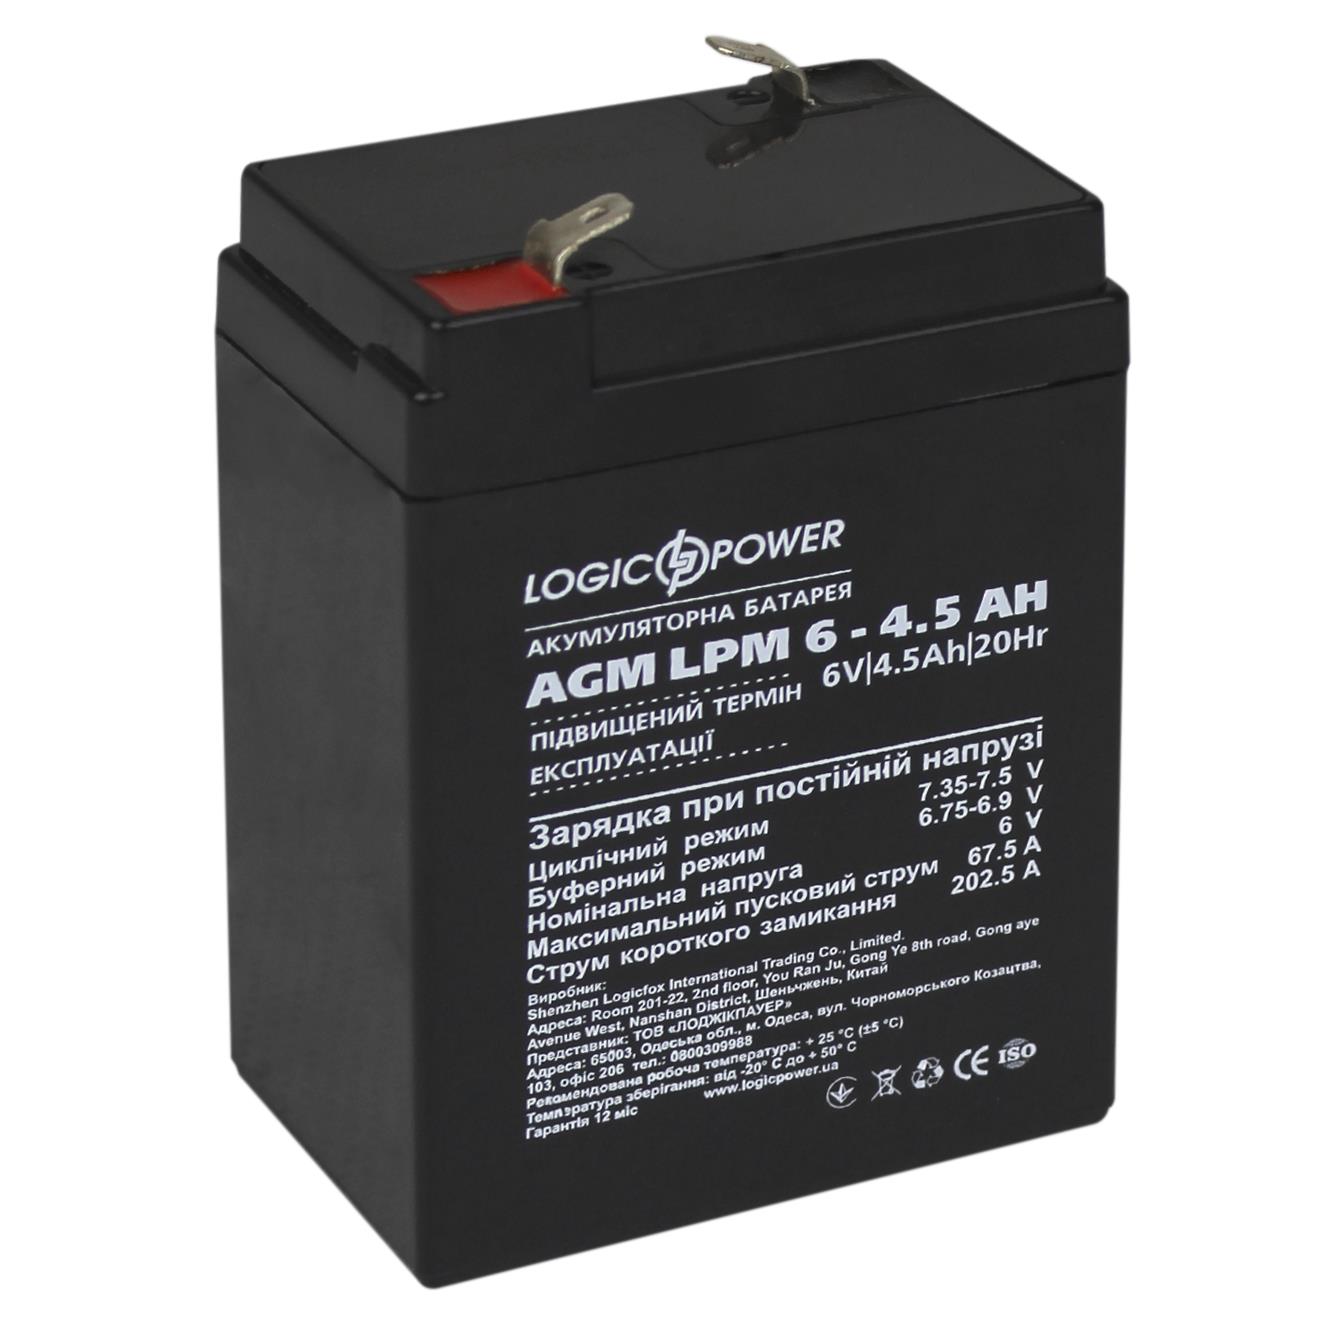 Аккумулятор свинцово-кислотный LogicPower AGM LPM 6V - 4.5 Ah (3860) цена 295.00 грн - фотография 2